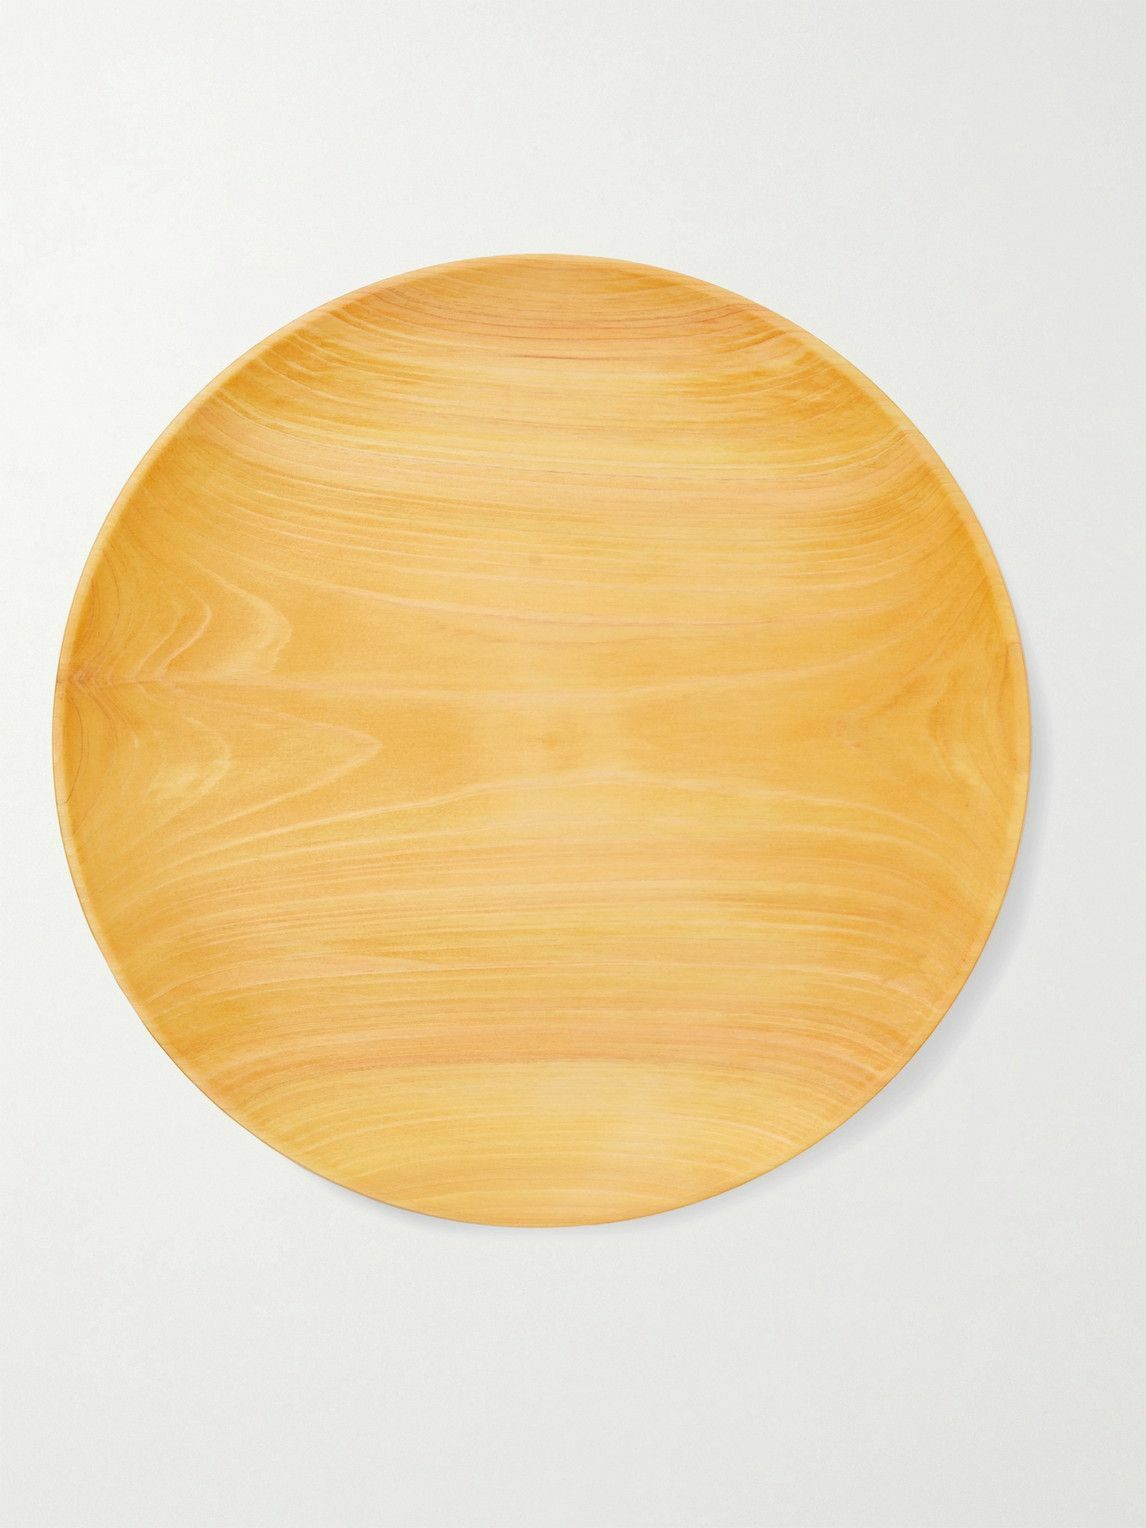 By Japan - 639 Cedar Plate